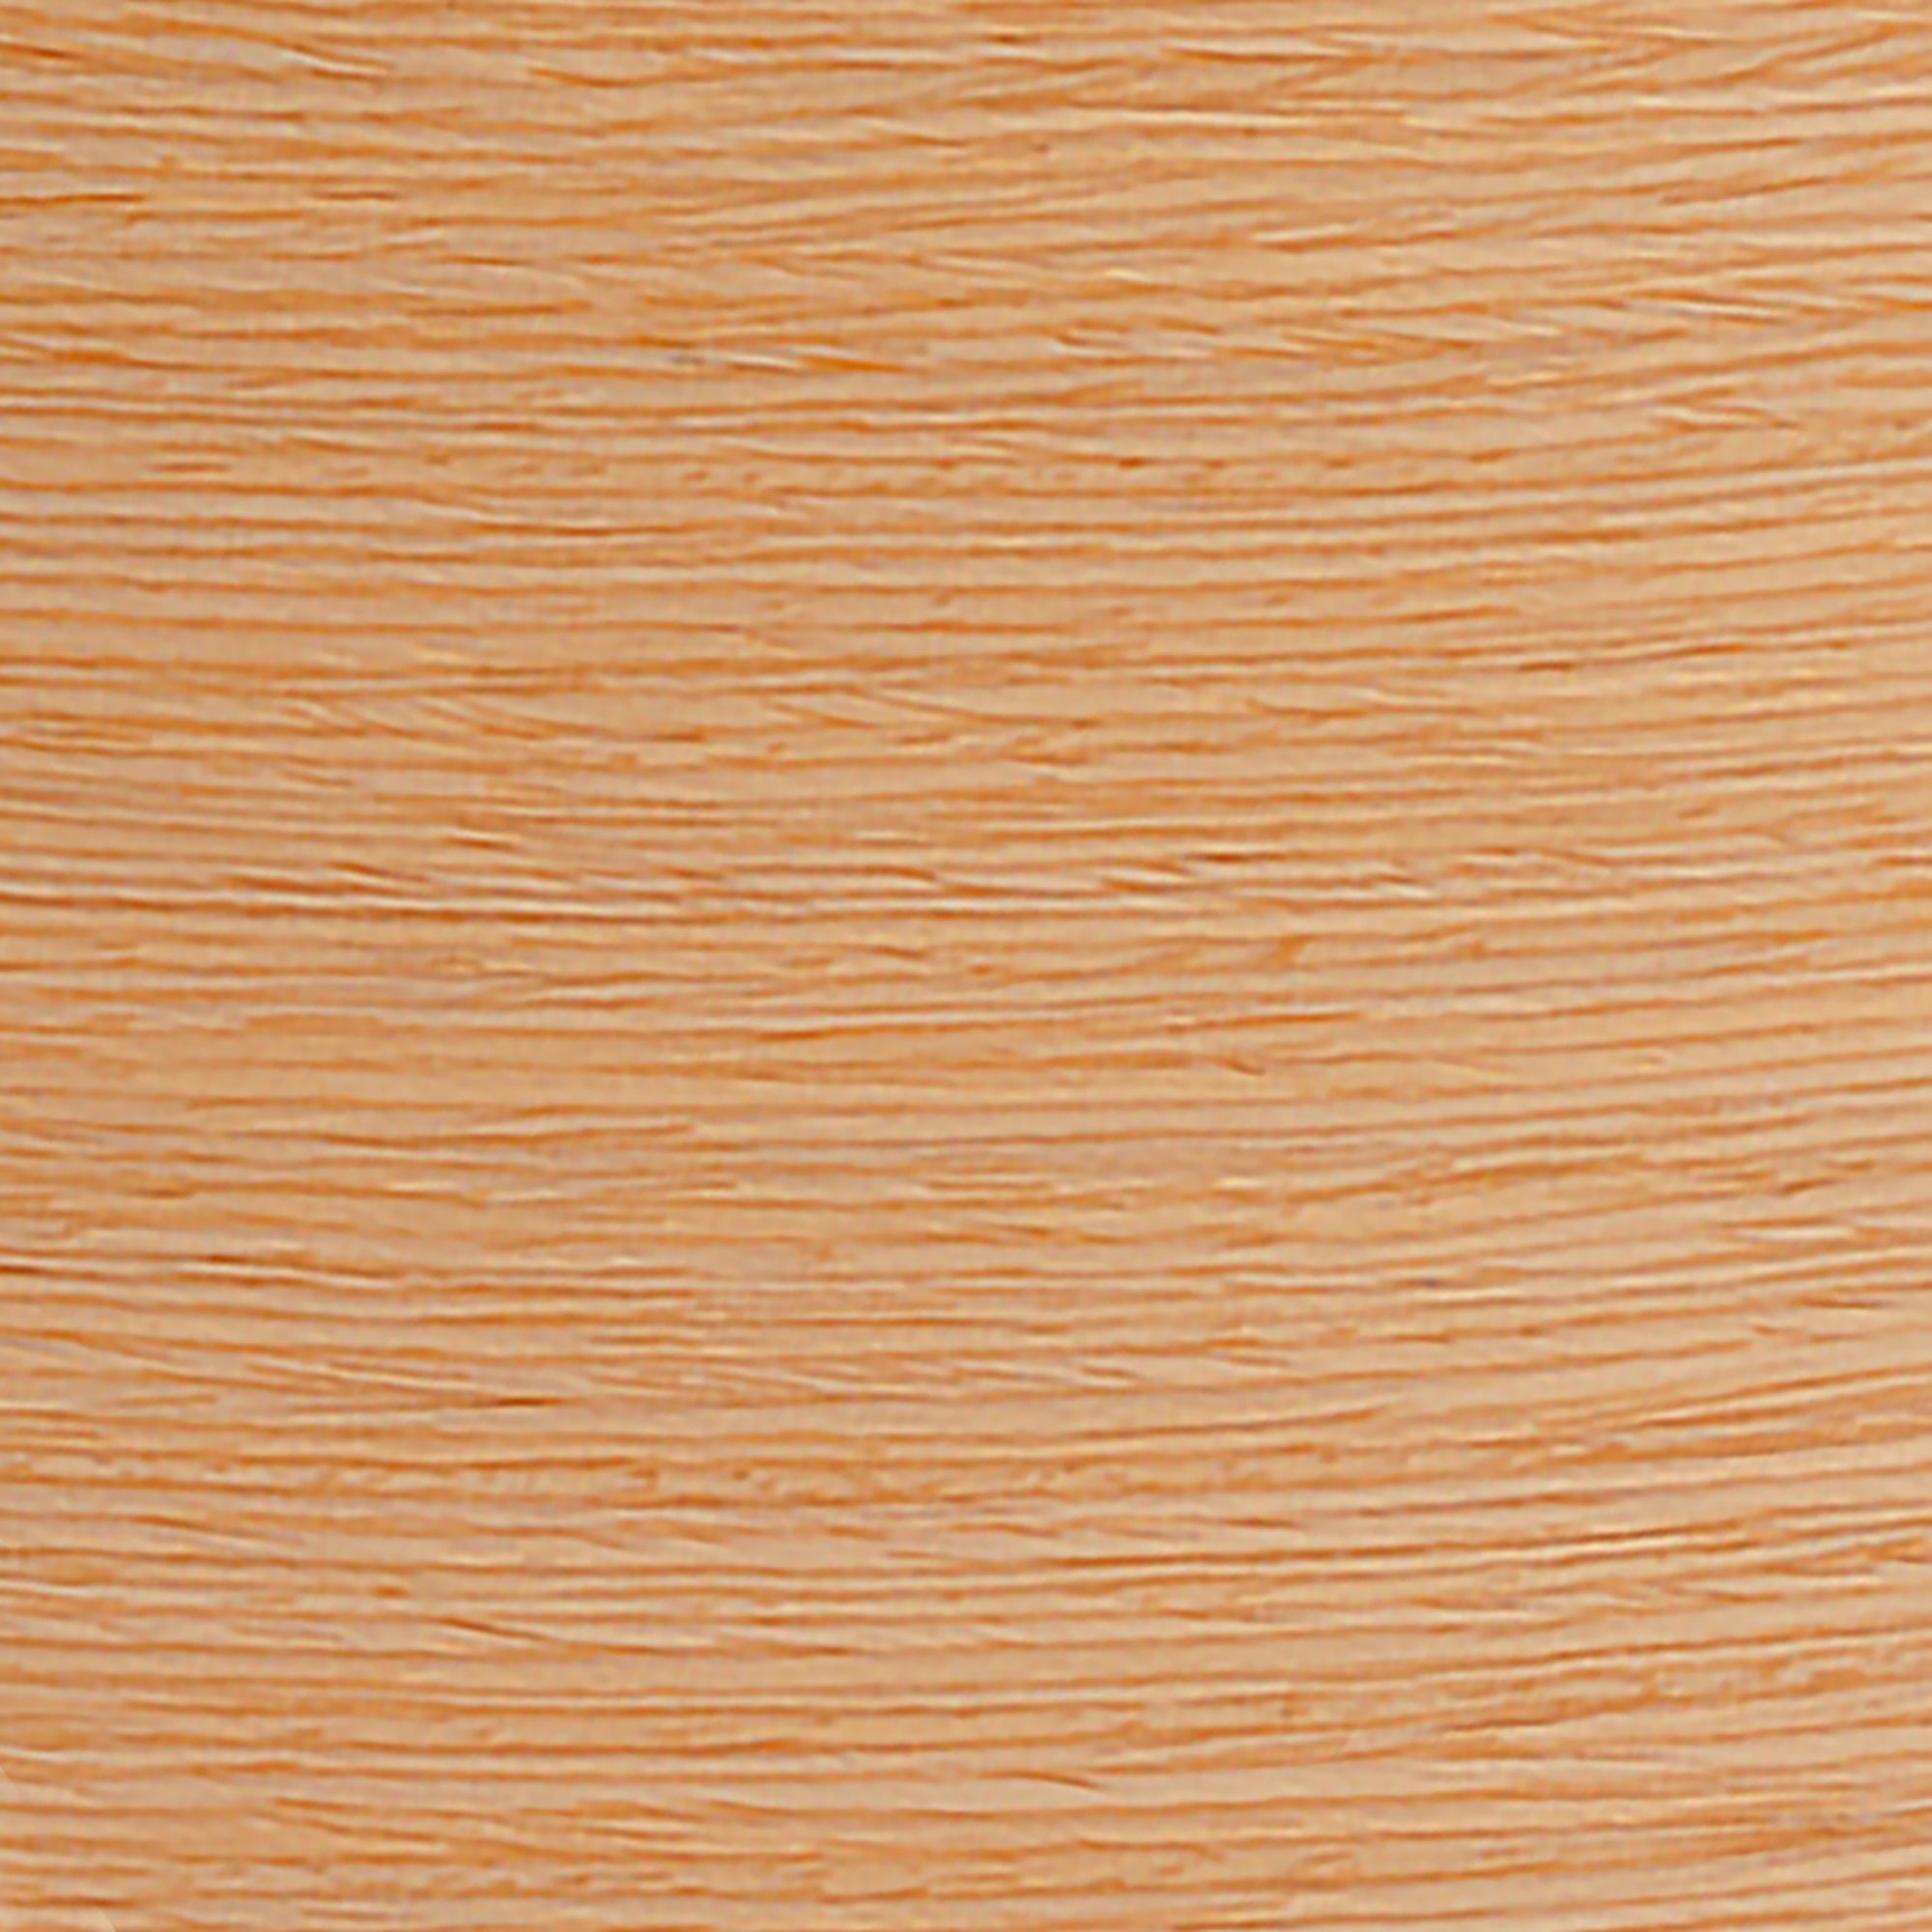 HALF BOWEN Scandinavian Modern White Oak Wood Veneer 23